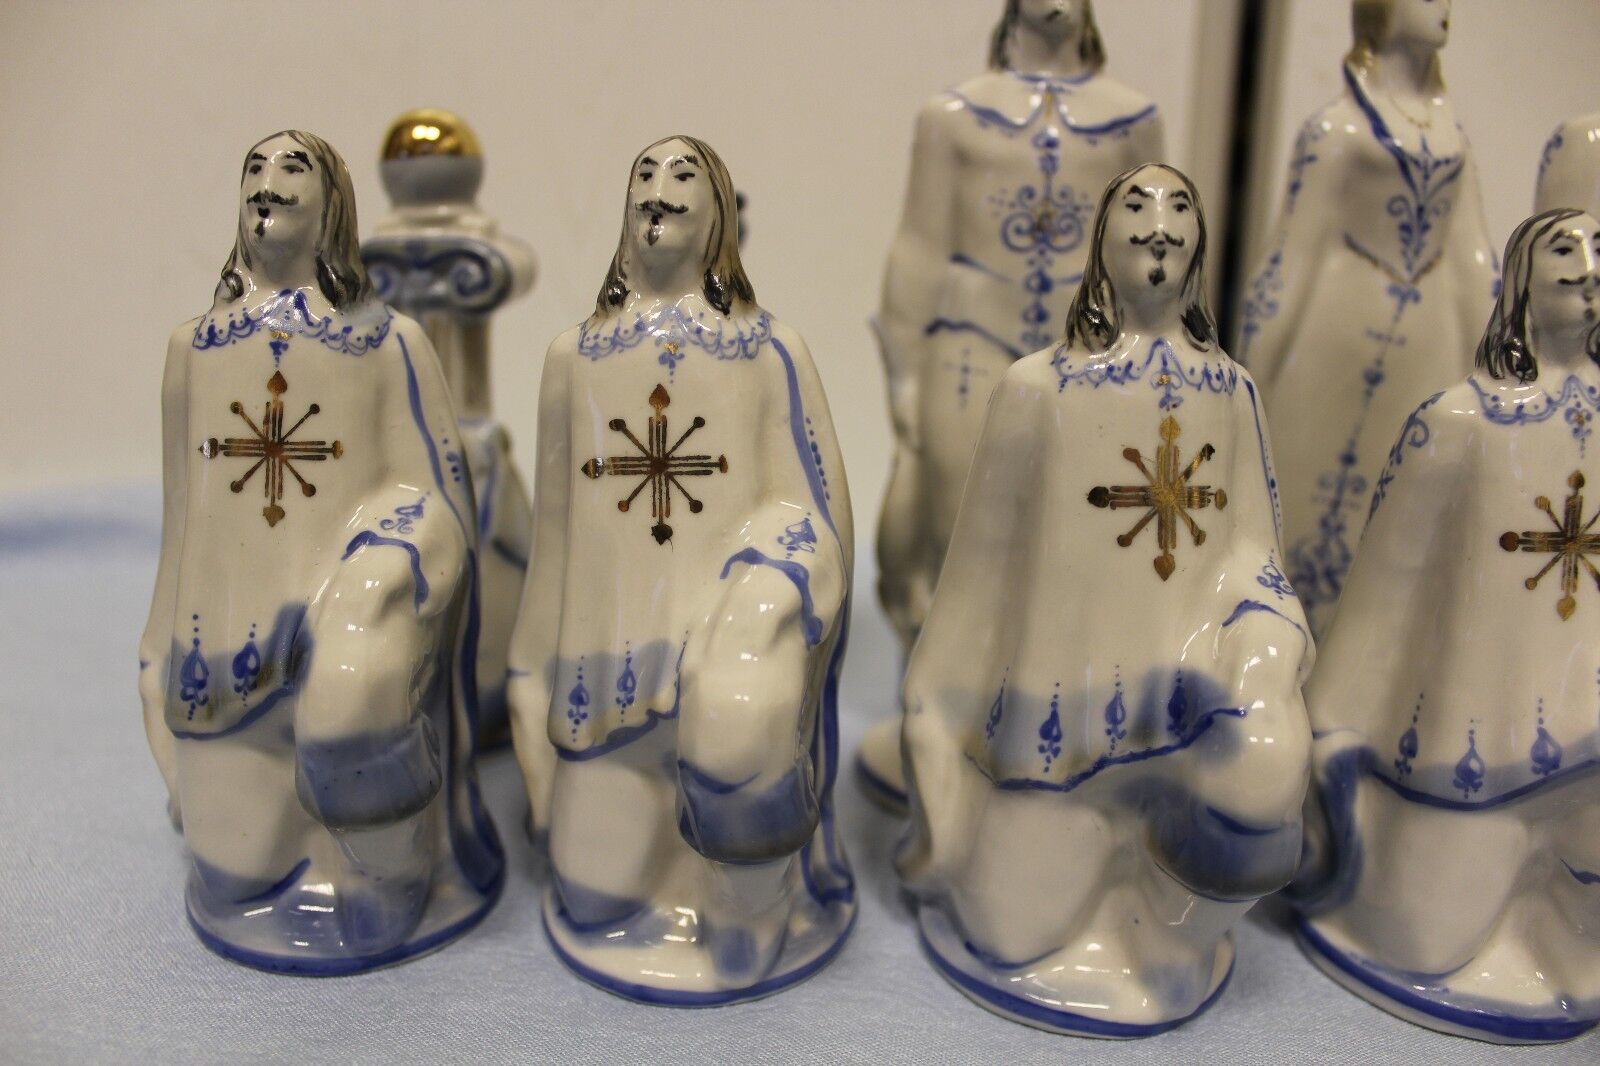 11421.Rare Porcelain Chess Pieces. Collectibles by Gorodnitsa porcelain factory.Ucrane